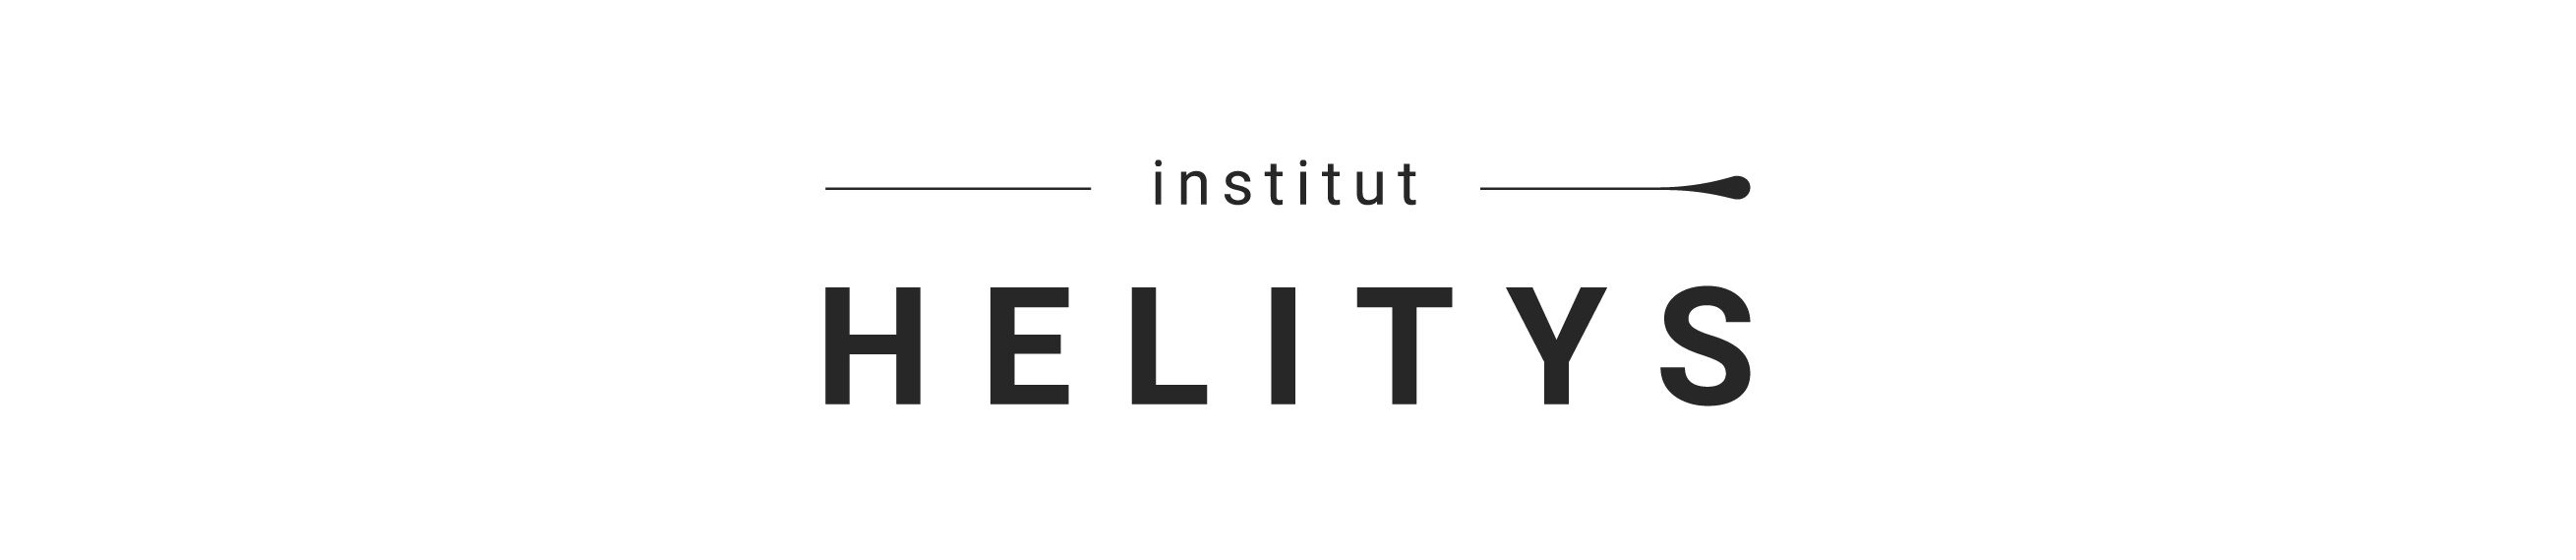 Institut Helitys